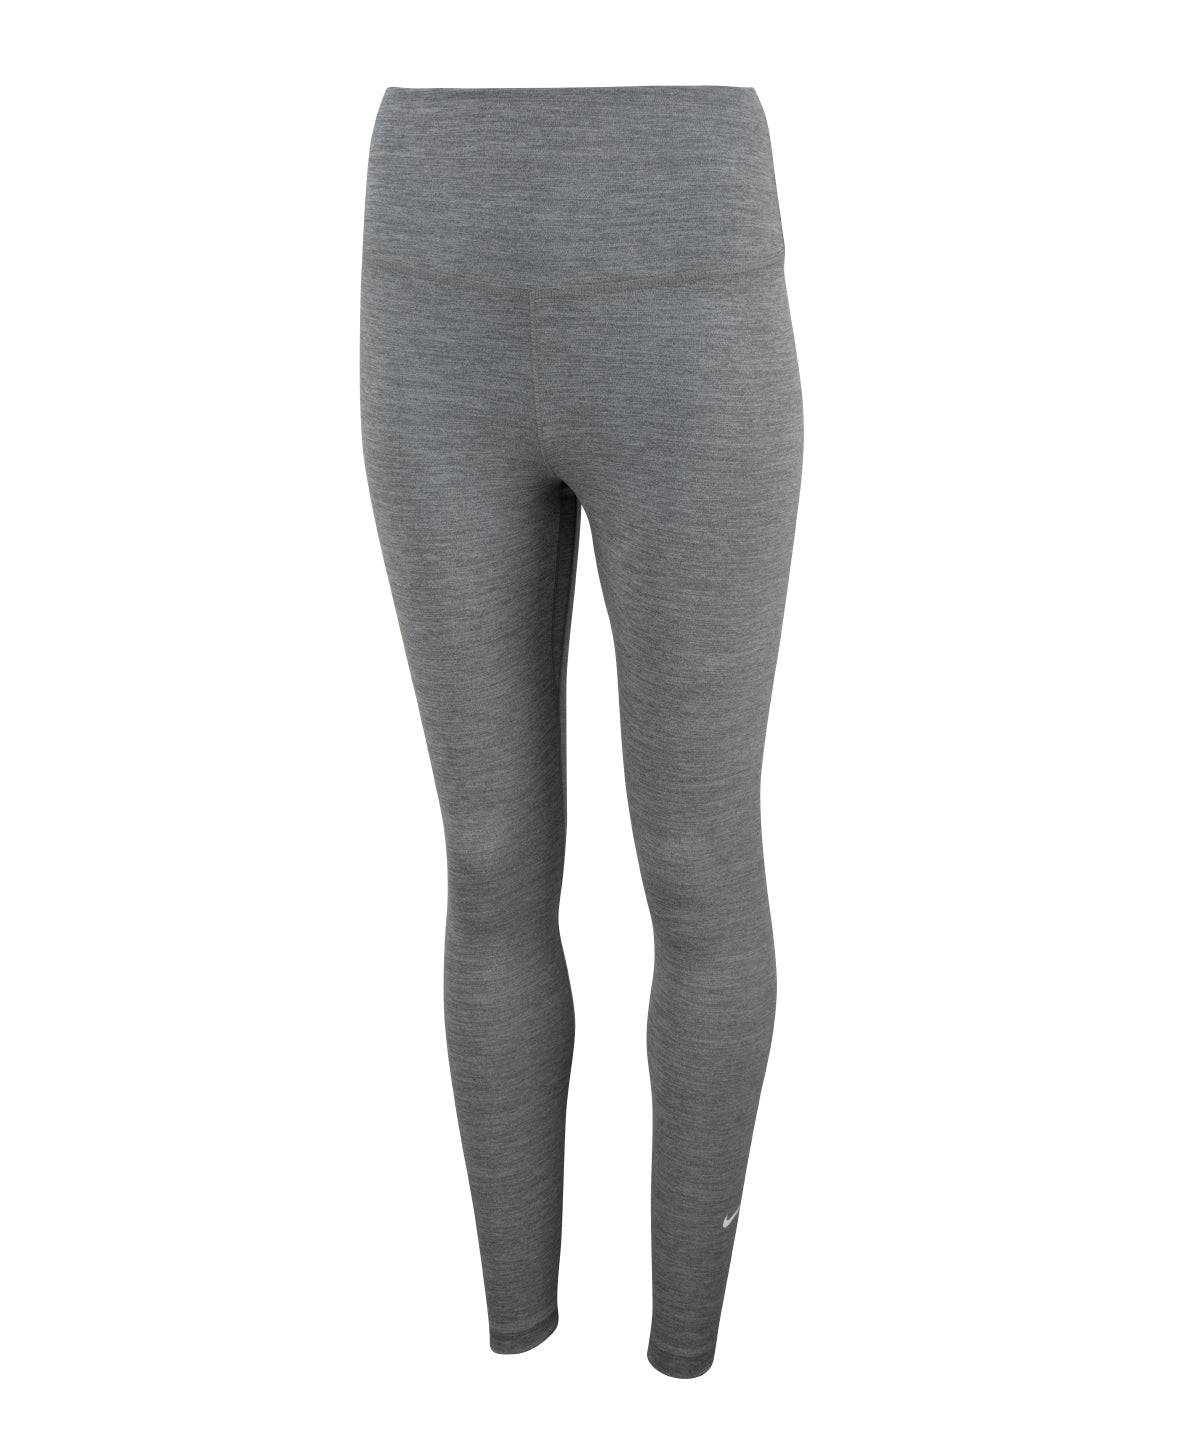 Iron Grey/Heather/White - Women’s Nike One Dri-FIT high-rise leggings